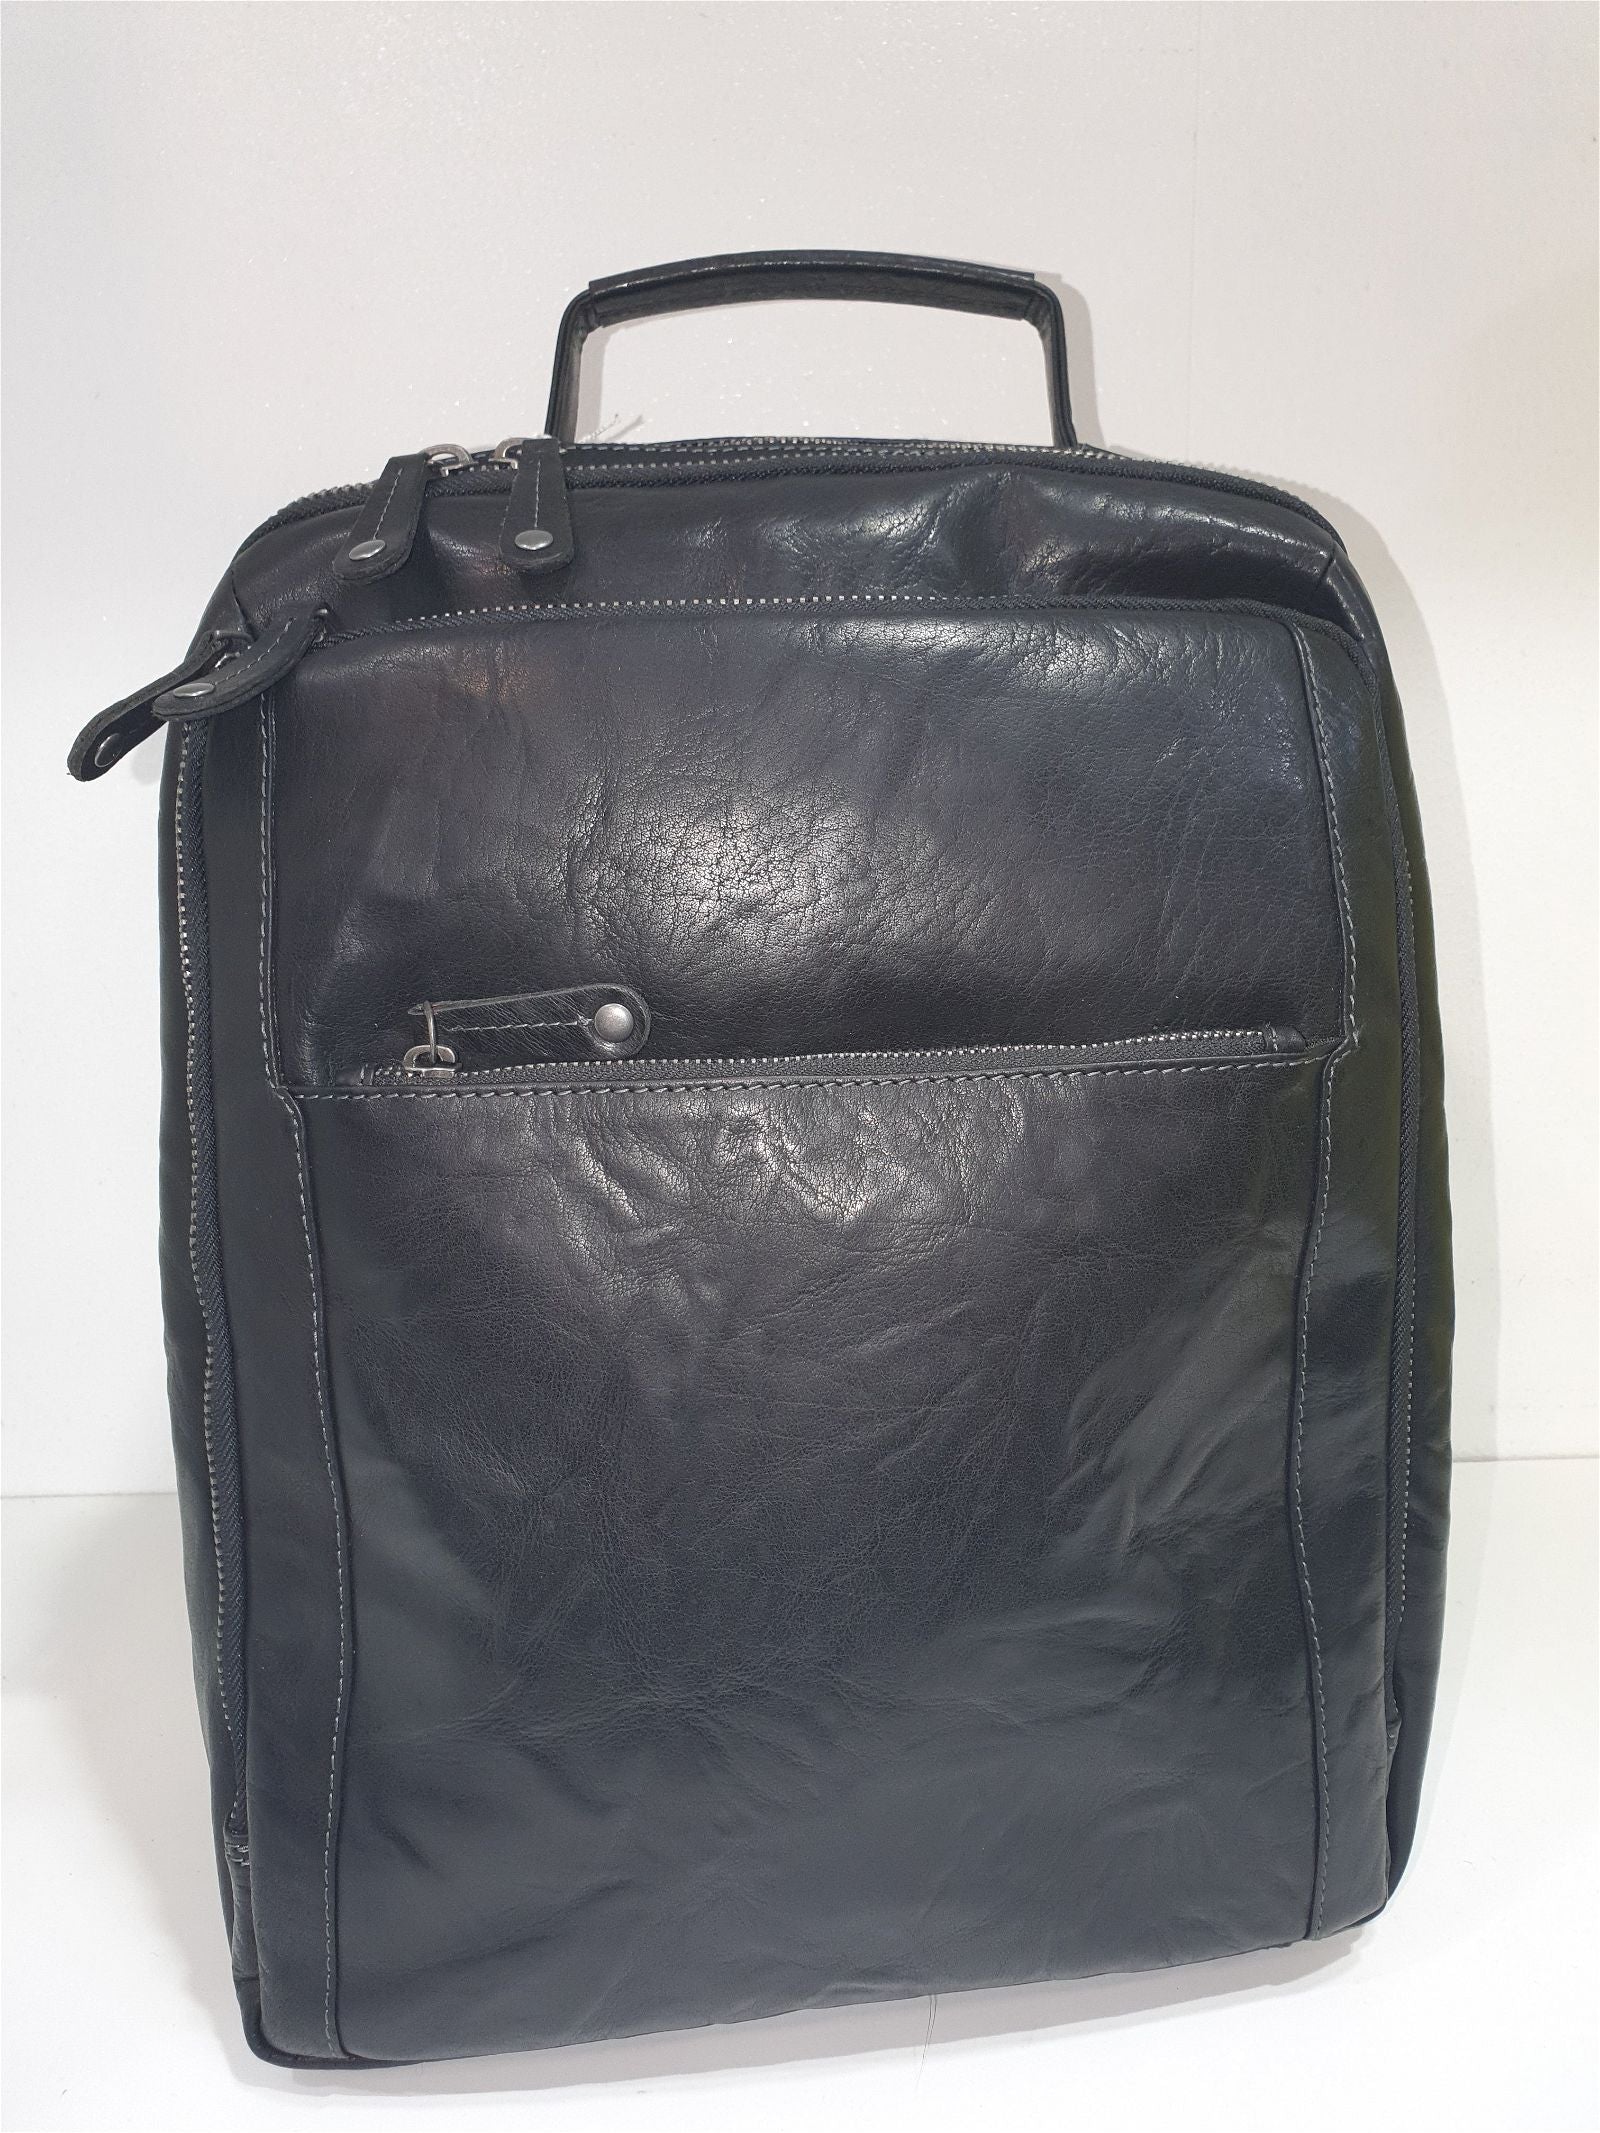 Oran - Mike Large Leather Laptop Backpack - rainbowbags